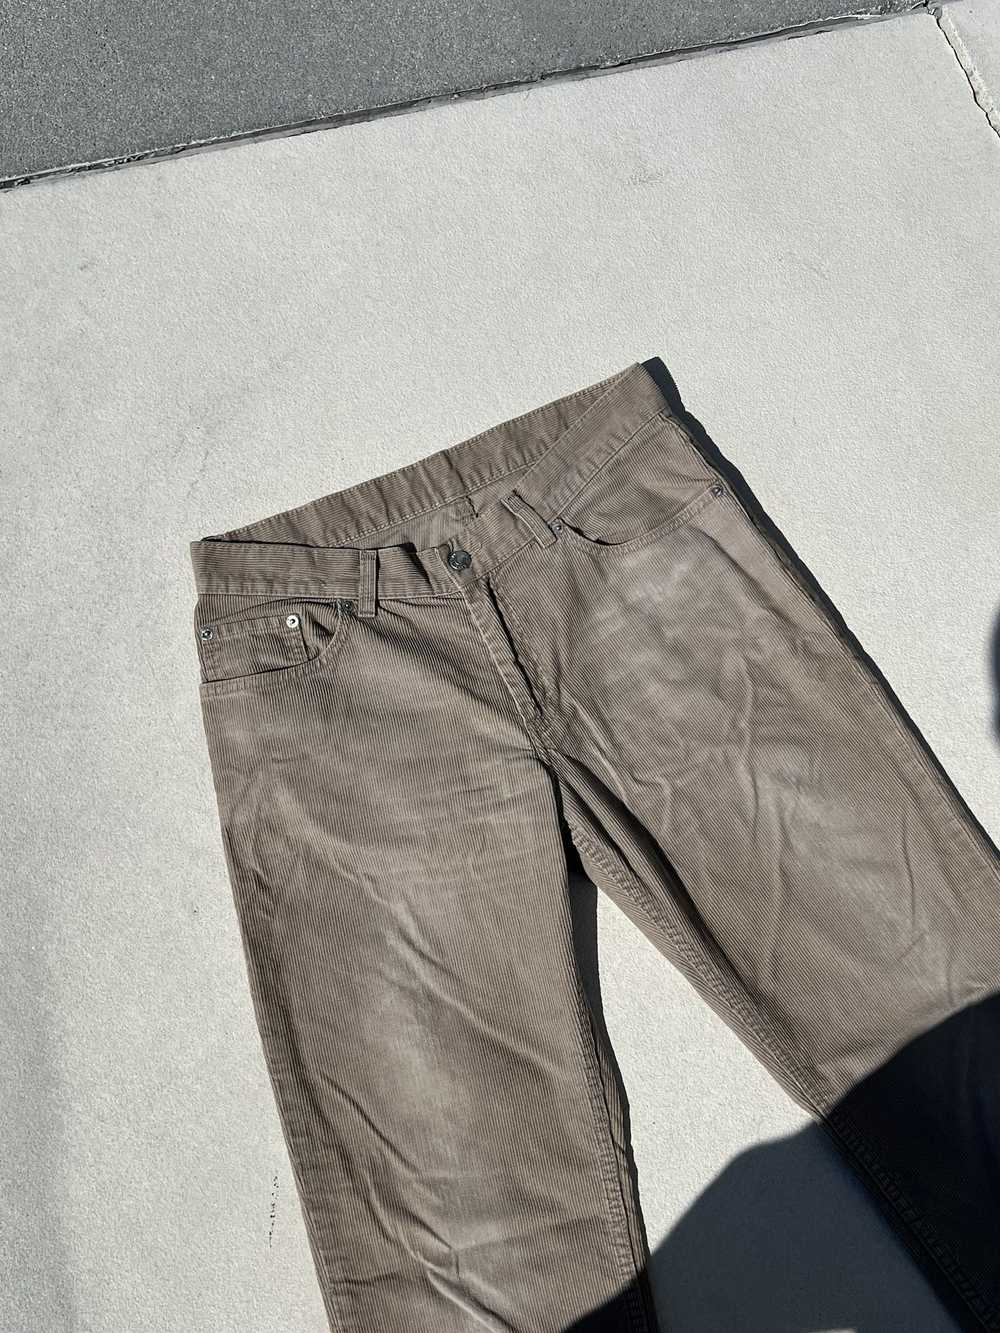 Helmut Lang Helmut Lang Vintage Corduroy Pants - image 2